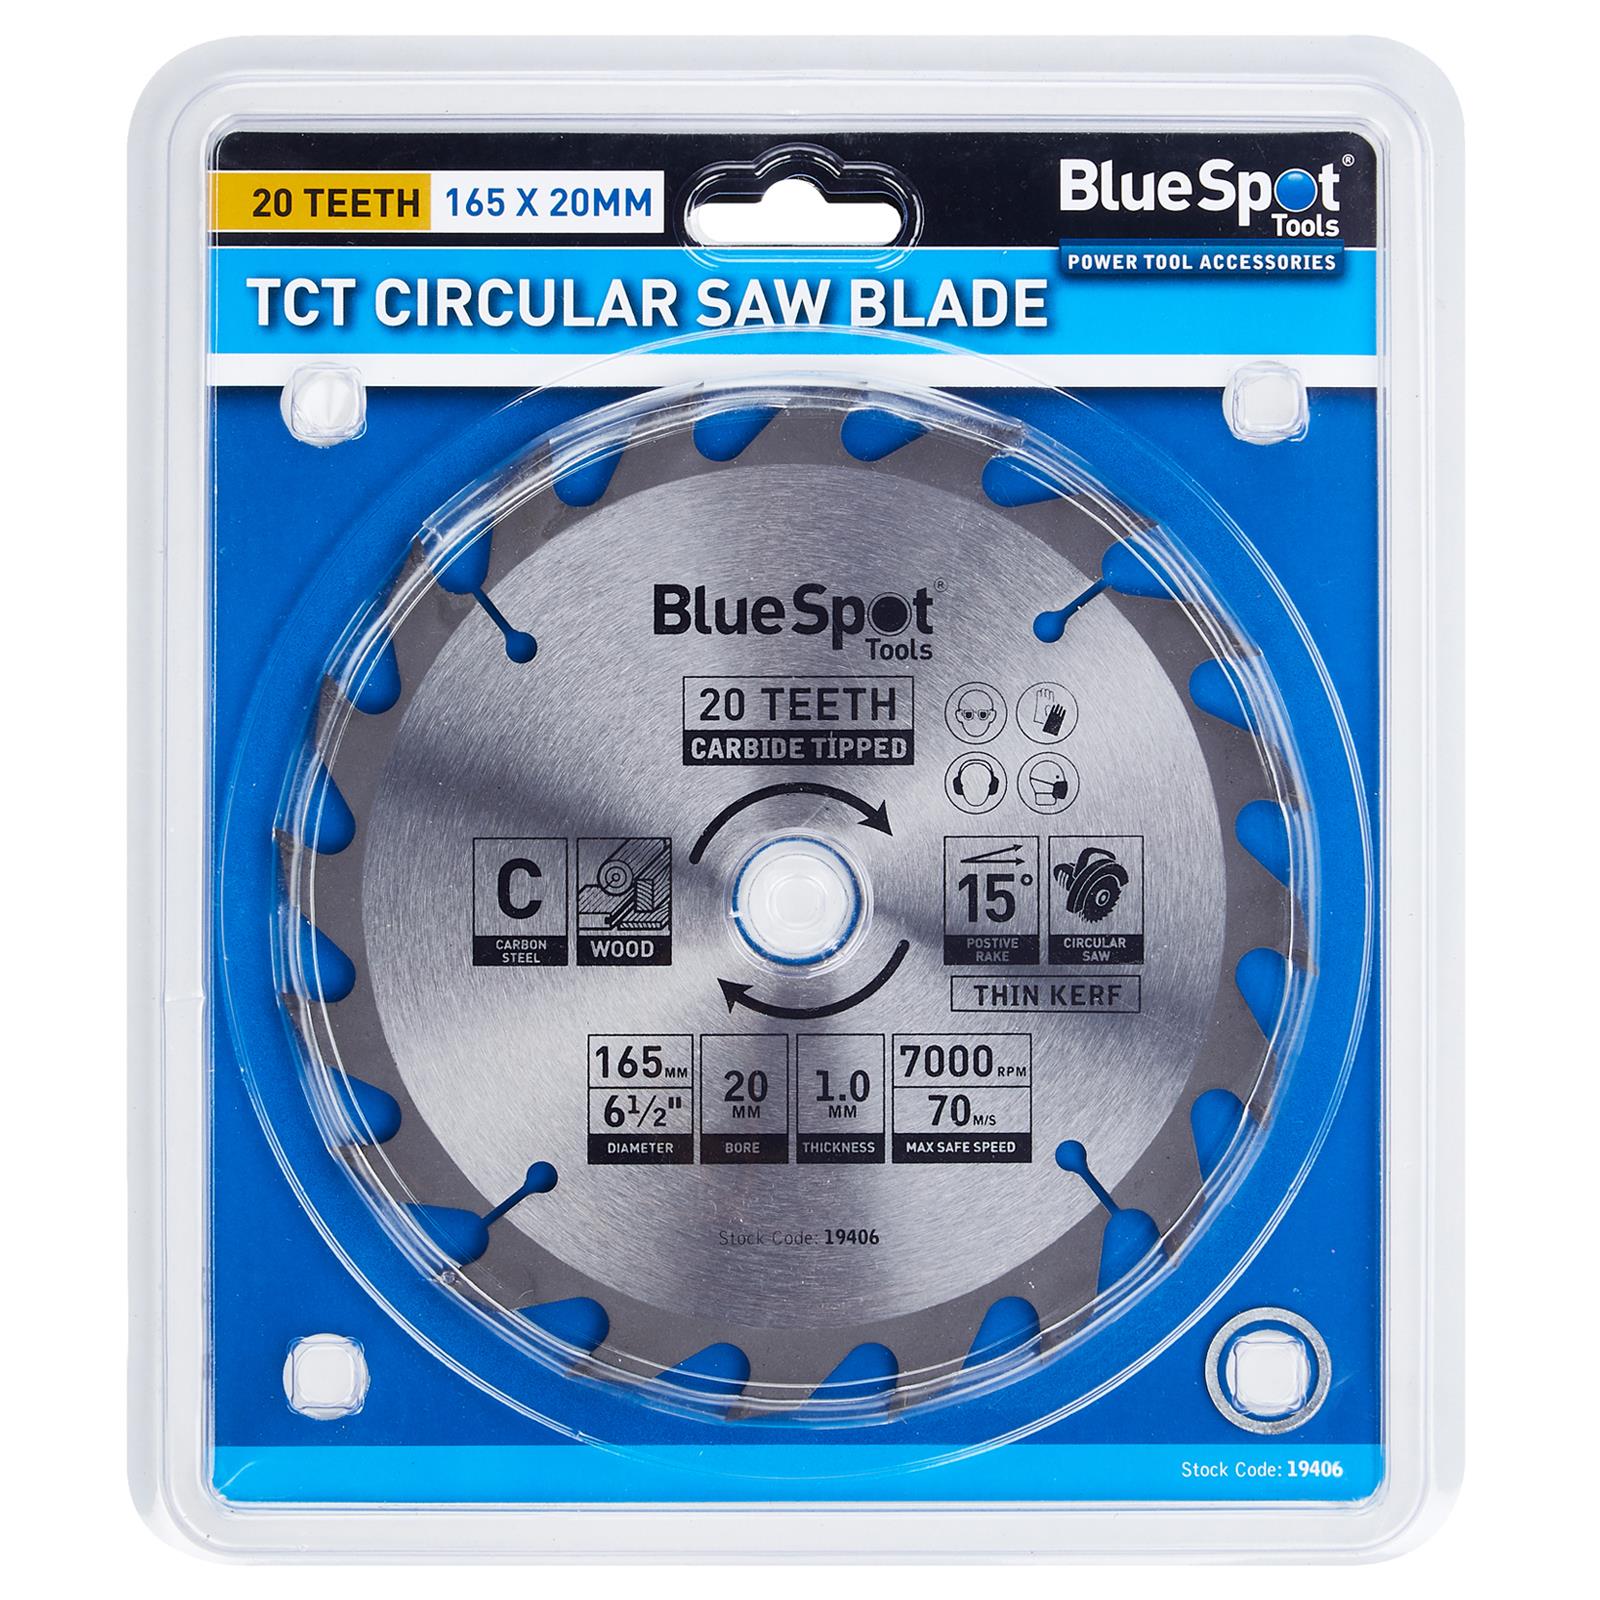 BlueSpot TCT Circular Saw Blade 20 Teeth 165mm x 20mm